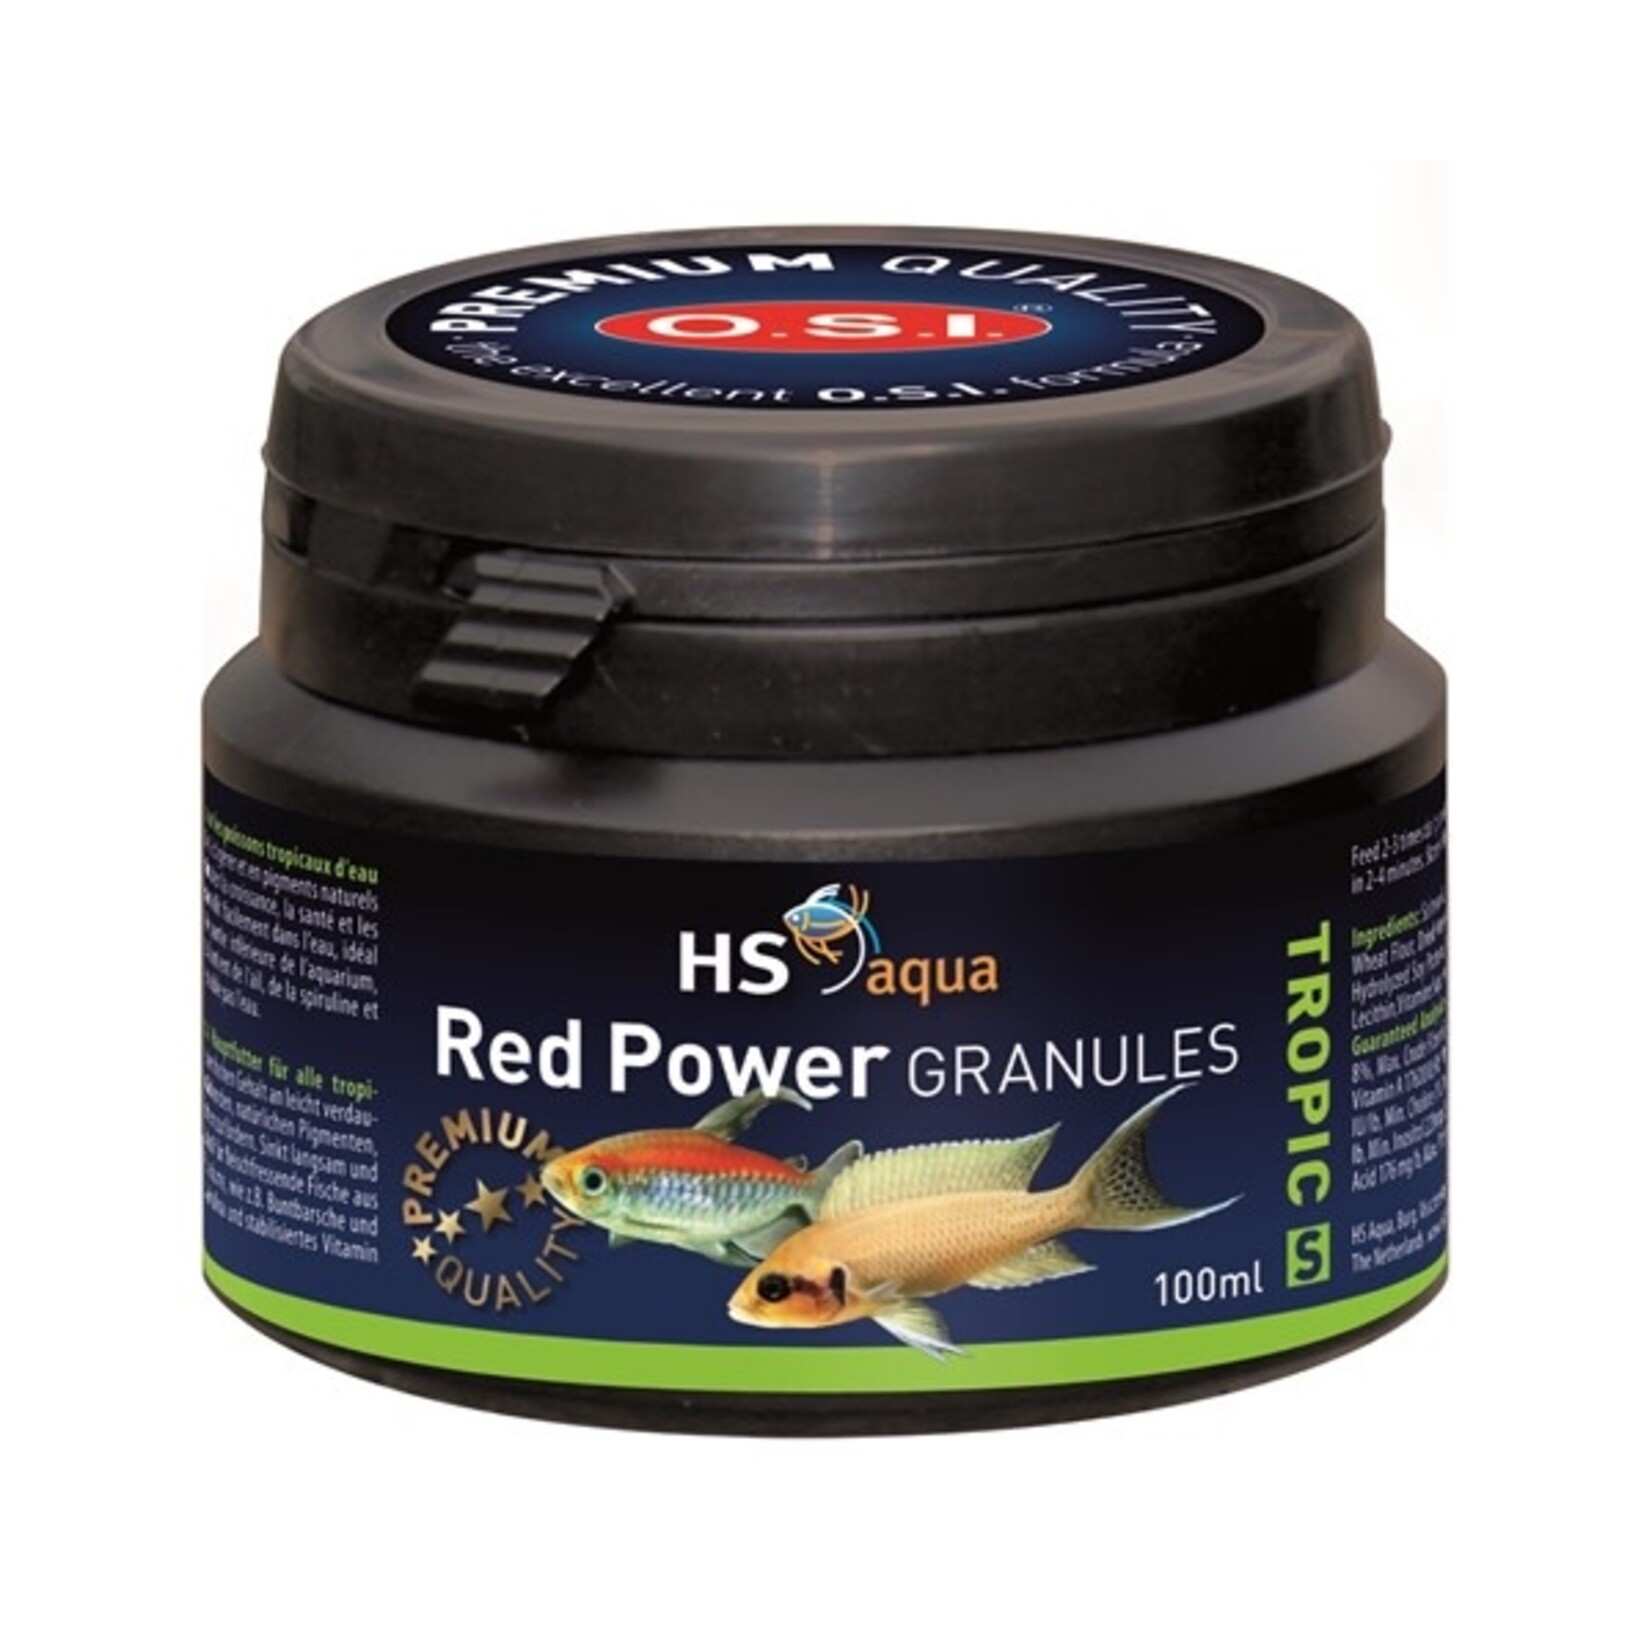 HS Aqua Red power granules s 100 ml